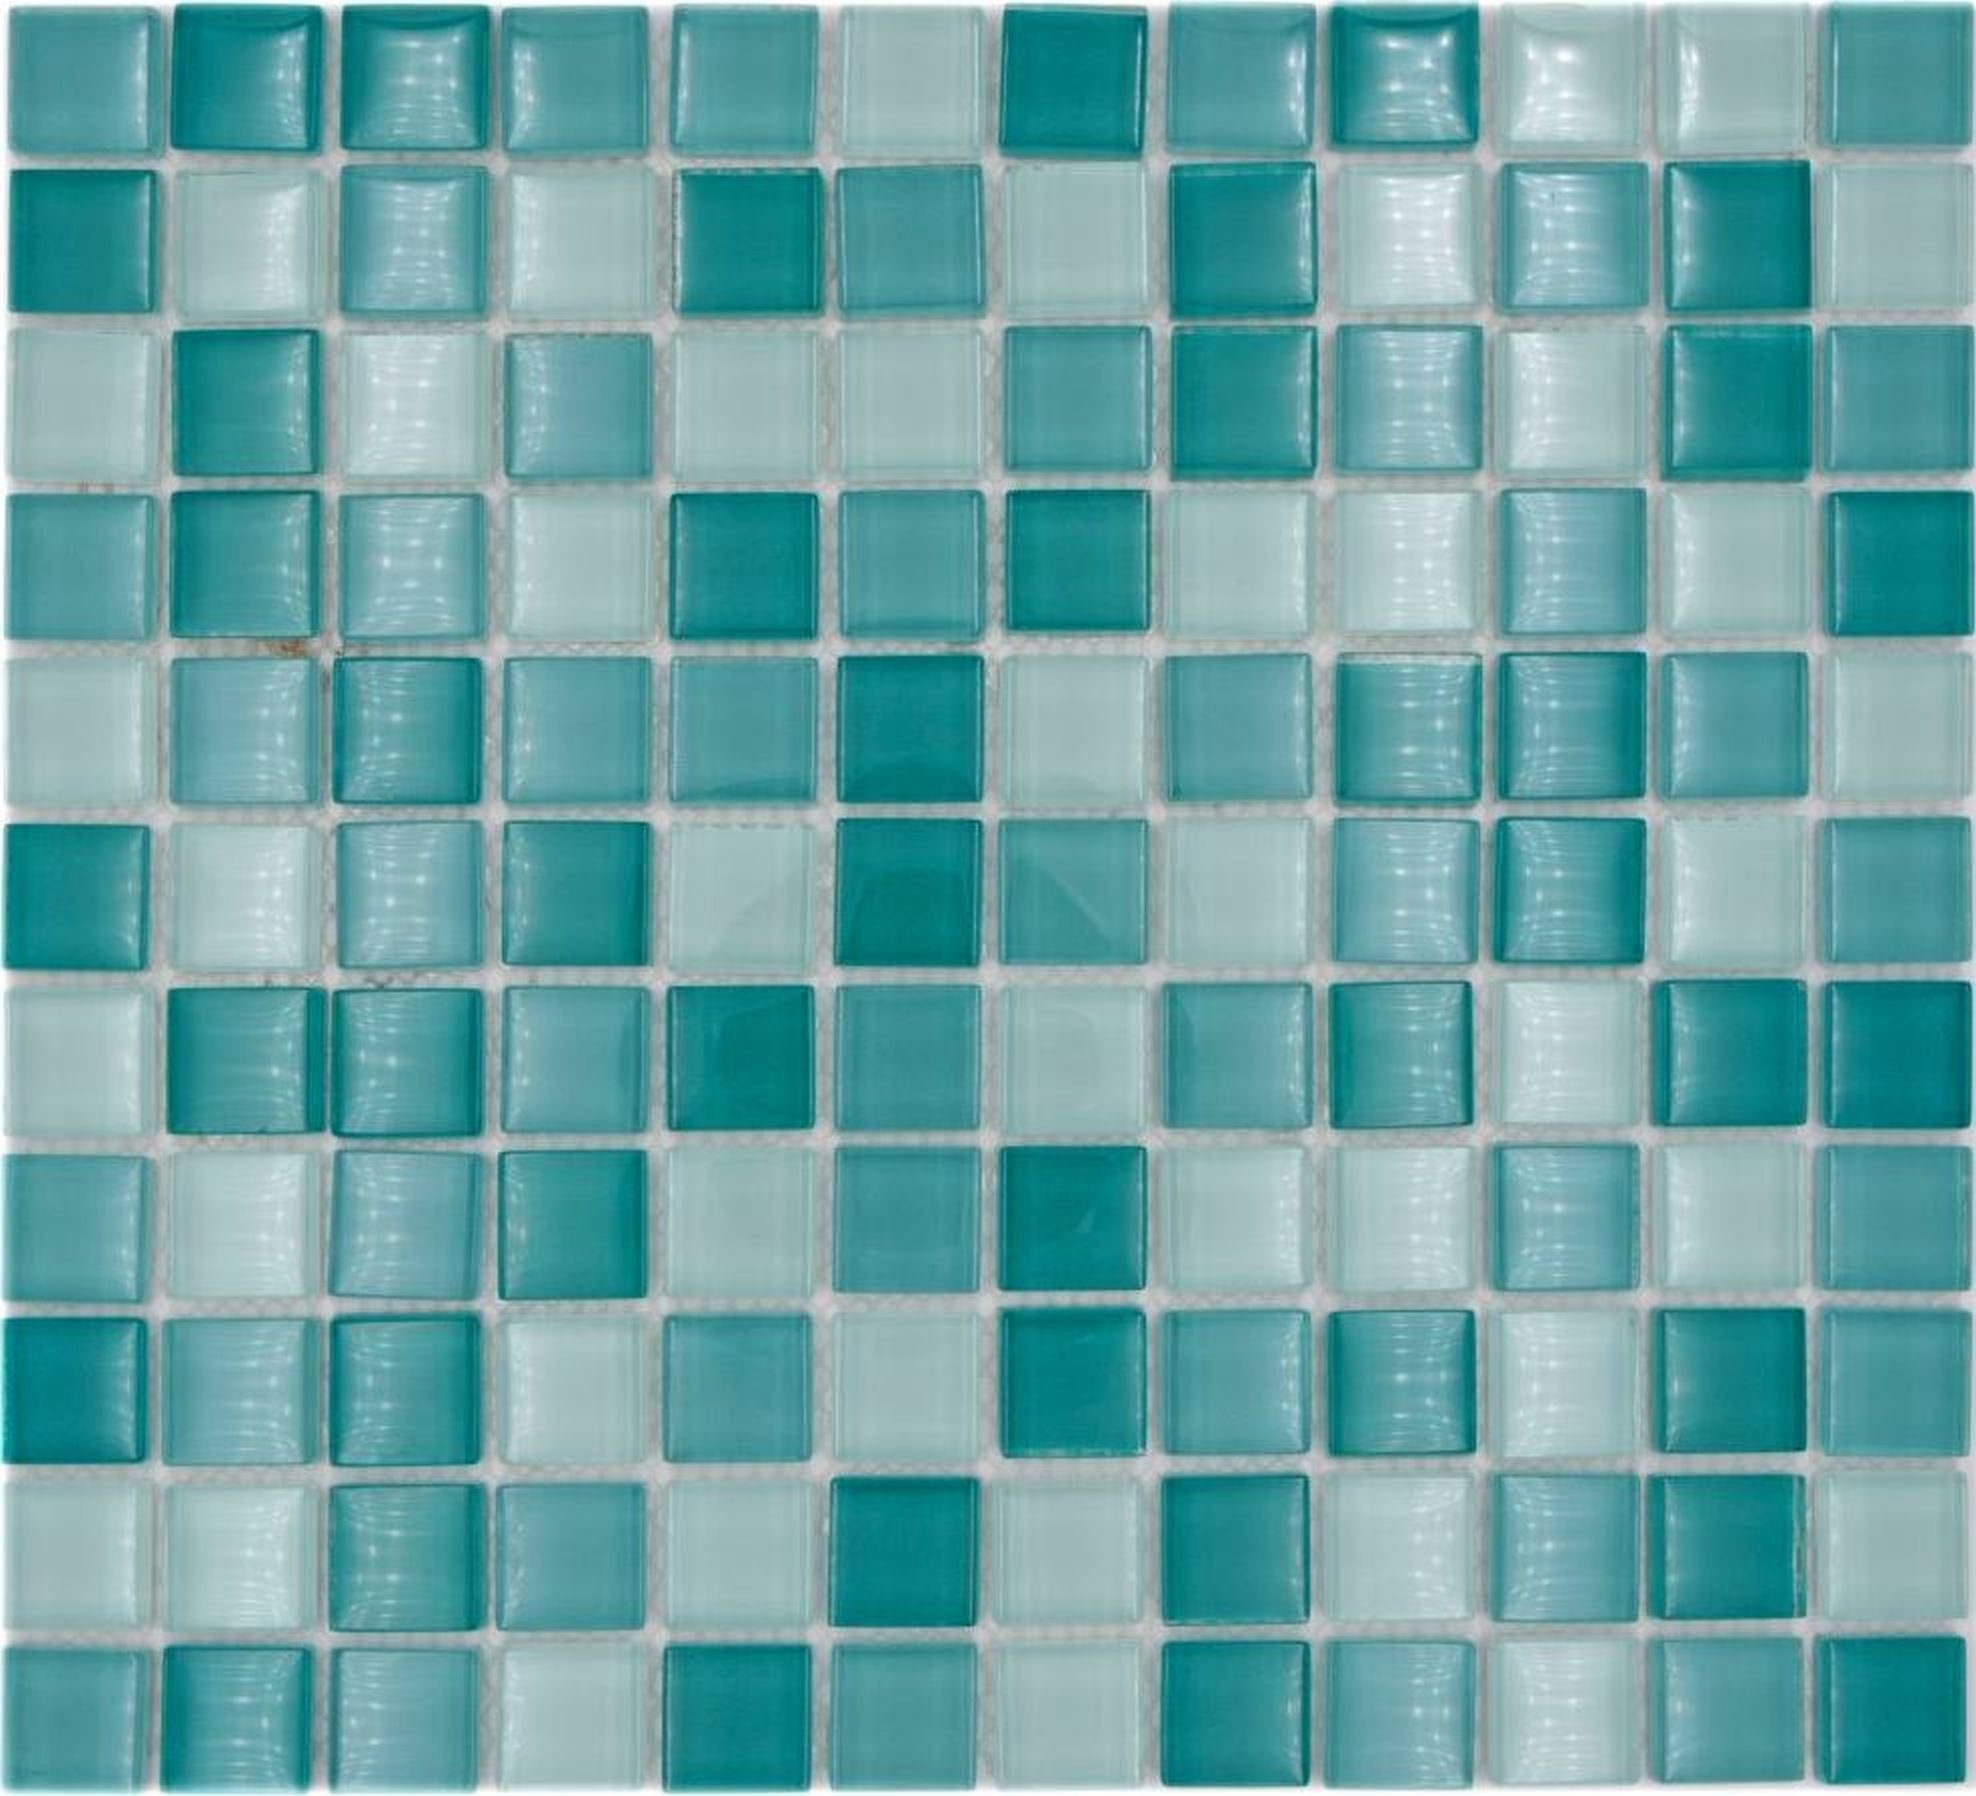 Mosani Mosaikfliesen Glasmosaik Mosaikfliesen türkis grün BAD WC Küche WAND